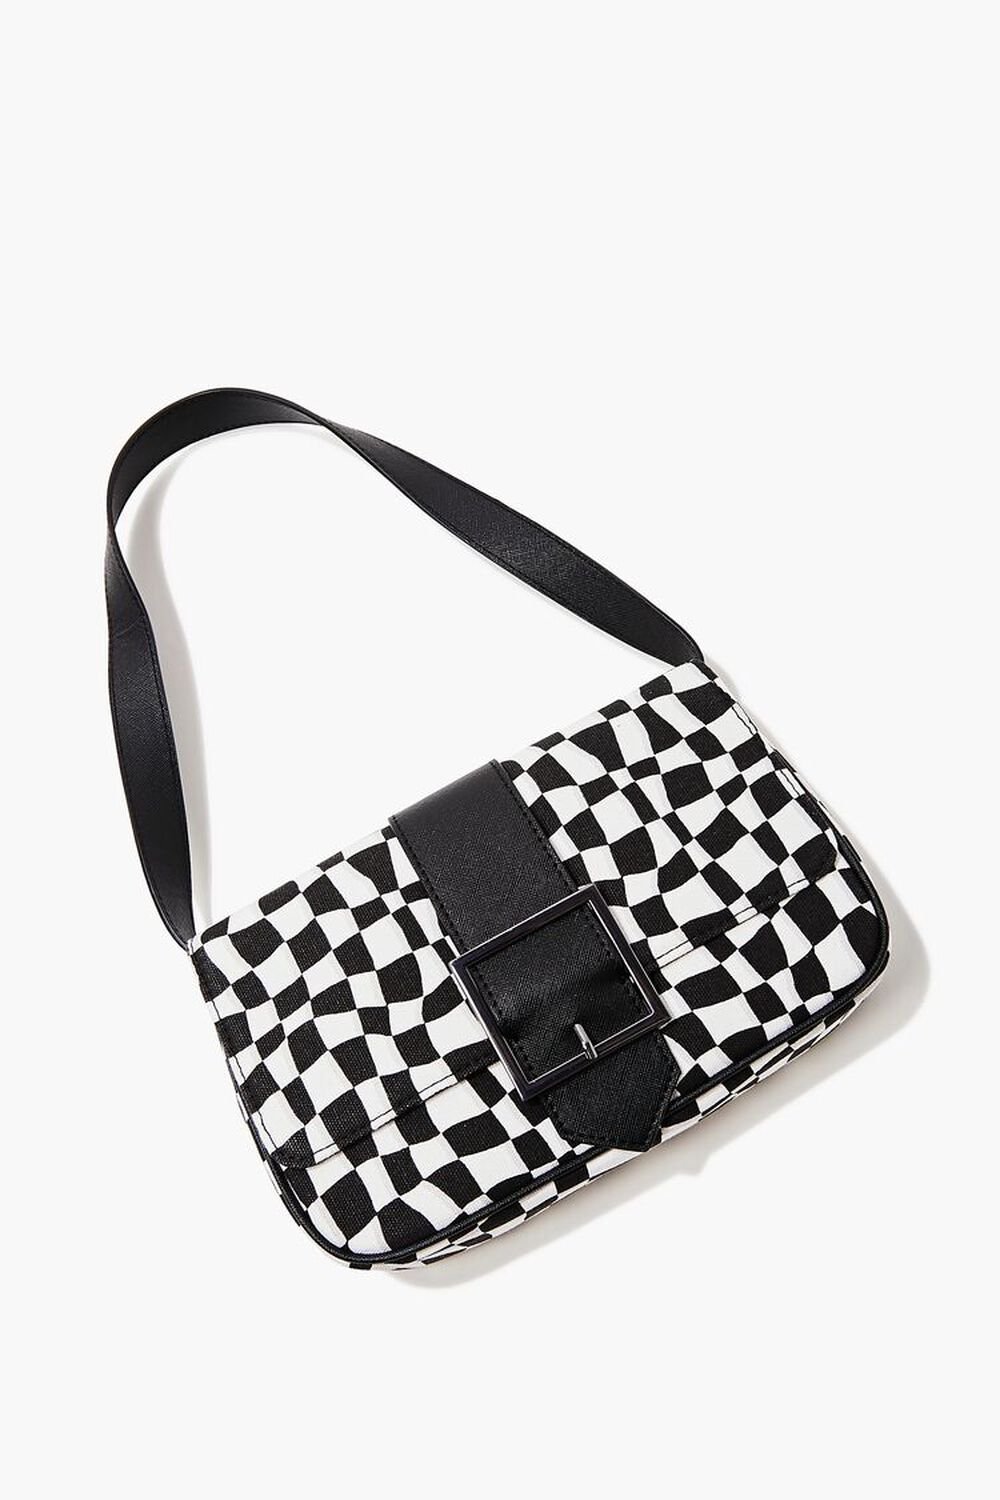 BLACK/WHITE Wavy Checkered Shoulder Bag, image 1